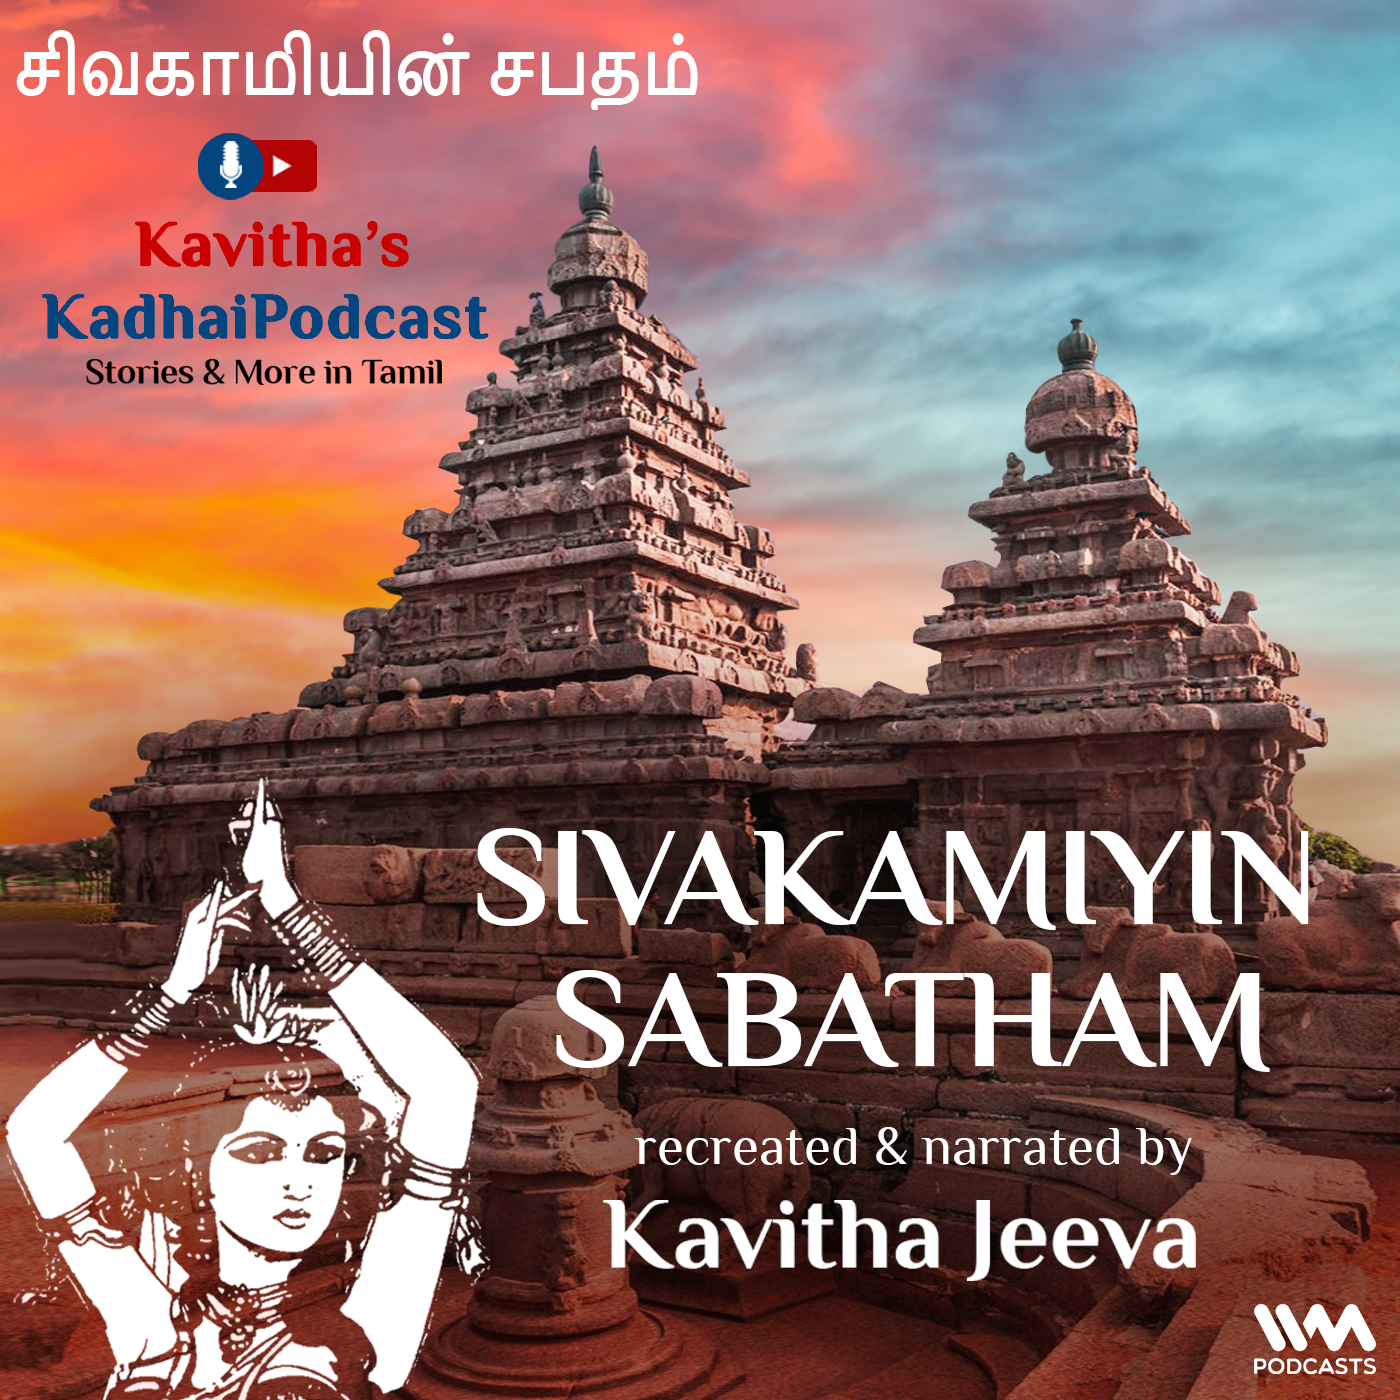 KadhaiPodcast's Sivakamiyin Sabatham with Kavitha Jeeva - Episode #94